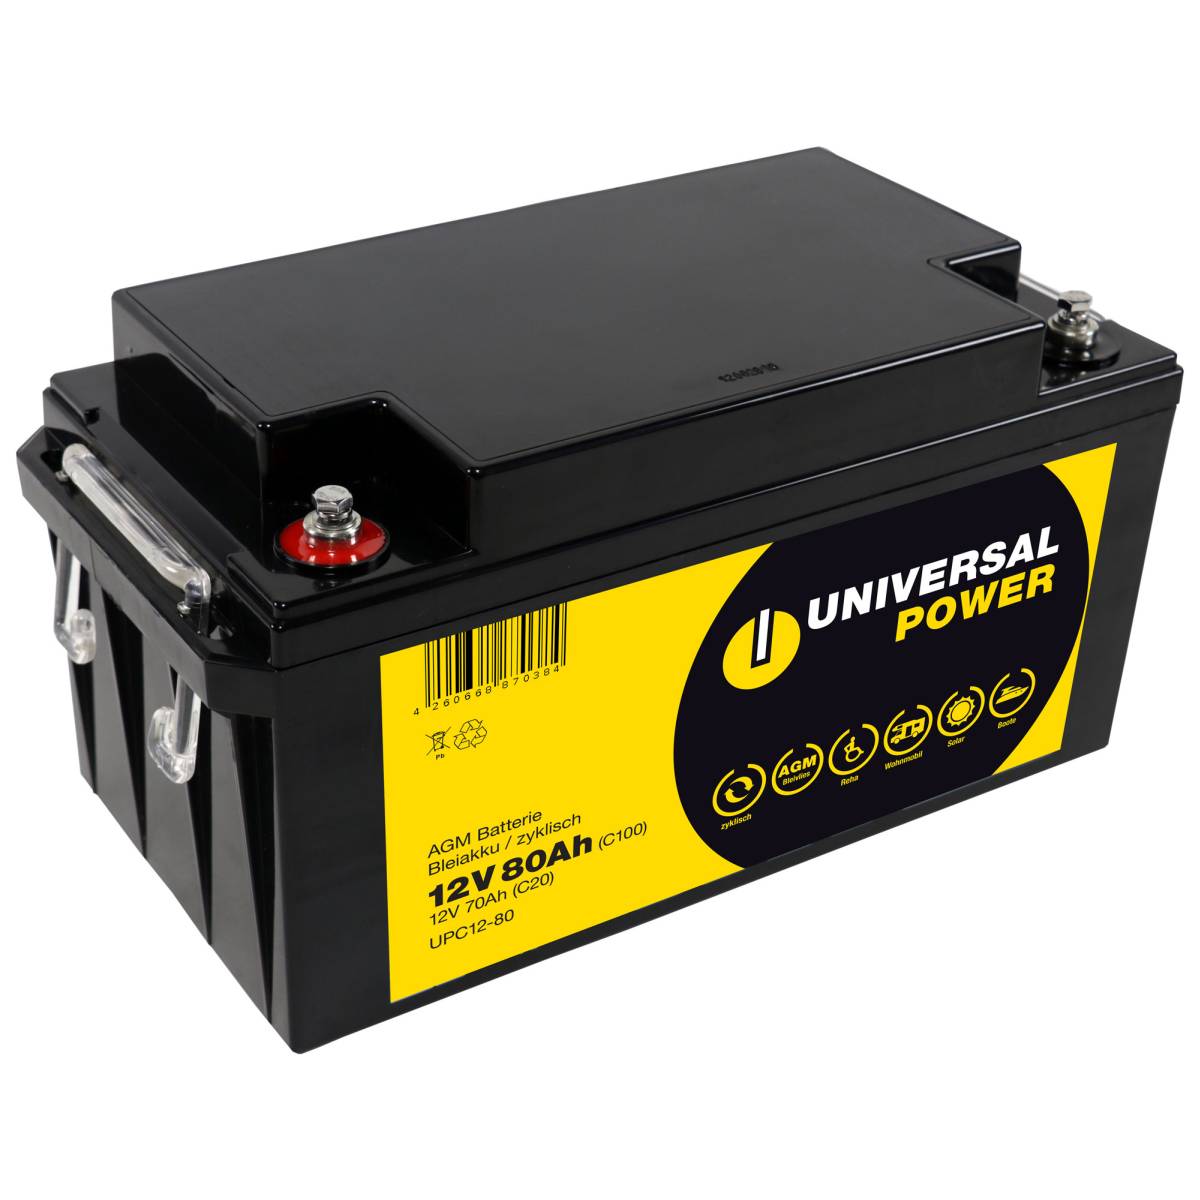 Universal Power UPC12-80 12V 80Ah (C100) batteria solare AGM per camper